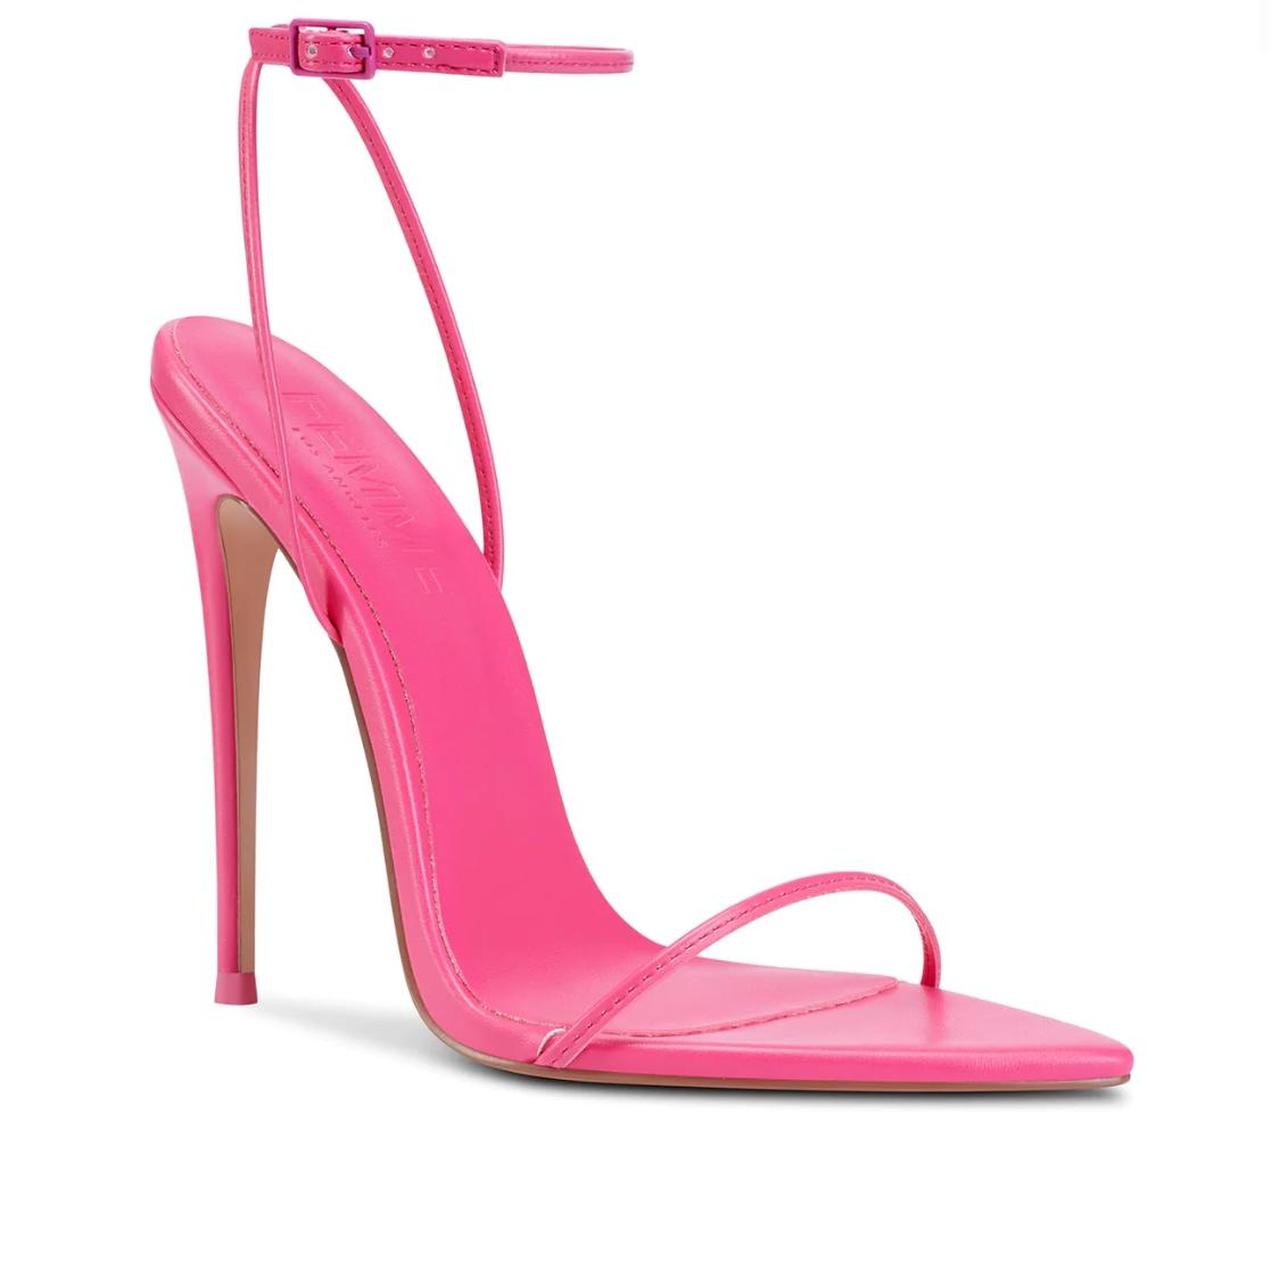 Femme Luxe Women's Pink Sandals (2)